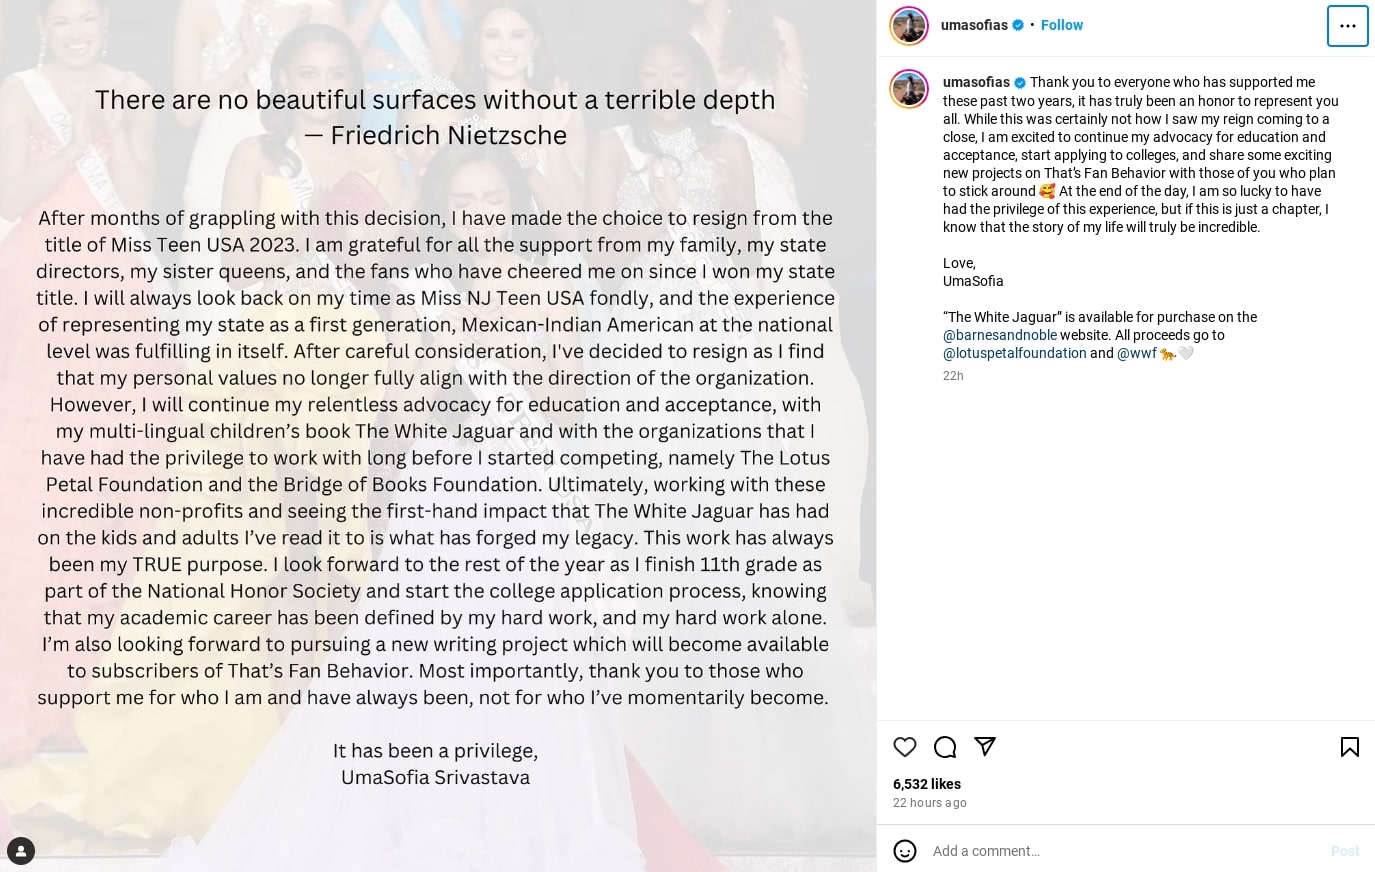 Statement on Instagram from UmaSofia Srivastava